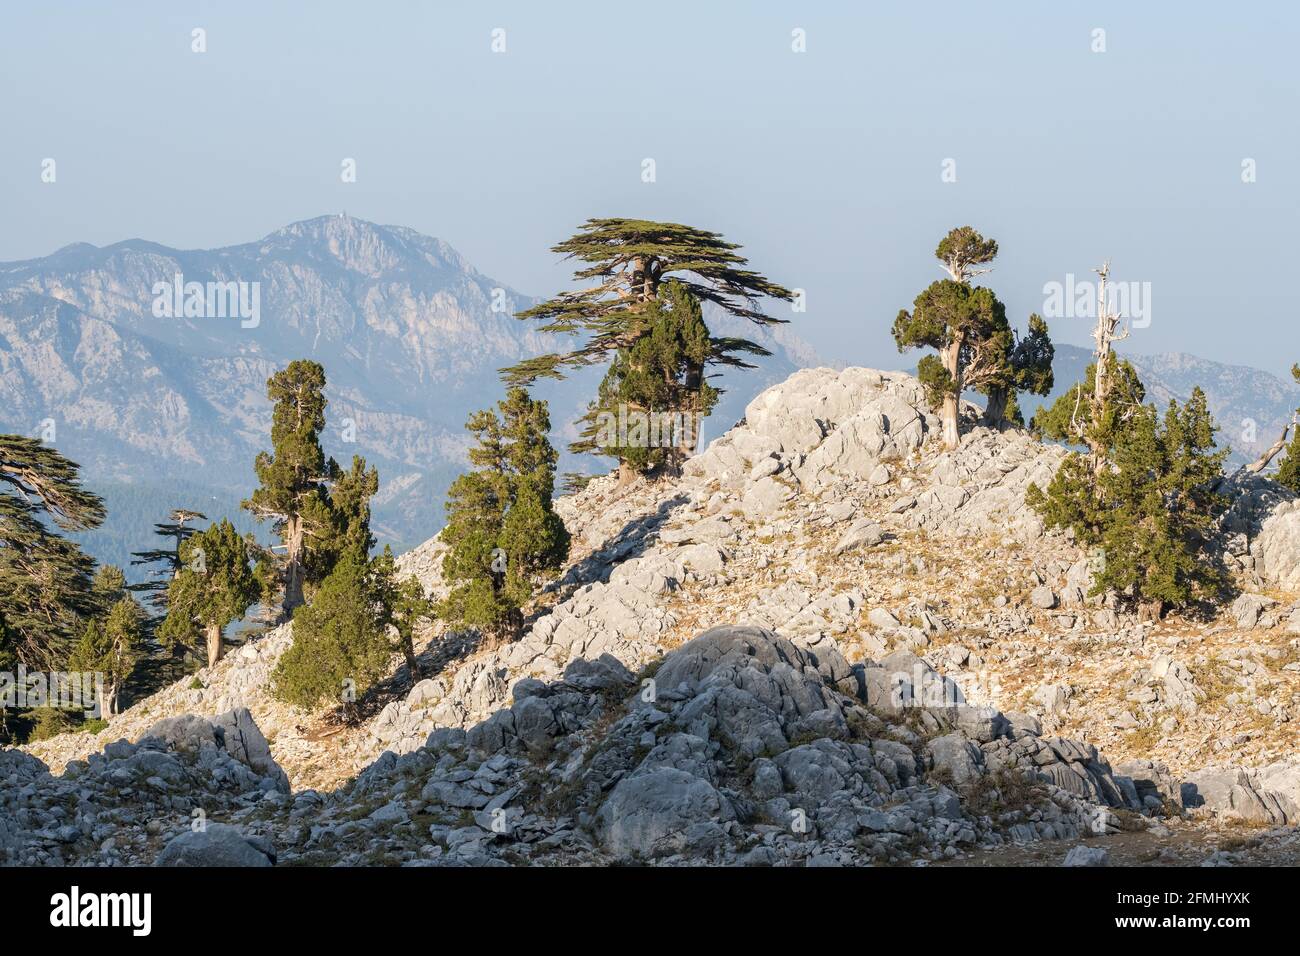 Lebanese Cedar trees at the slopes of Tahtali mountain in Turkey Stock Photo